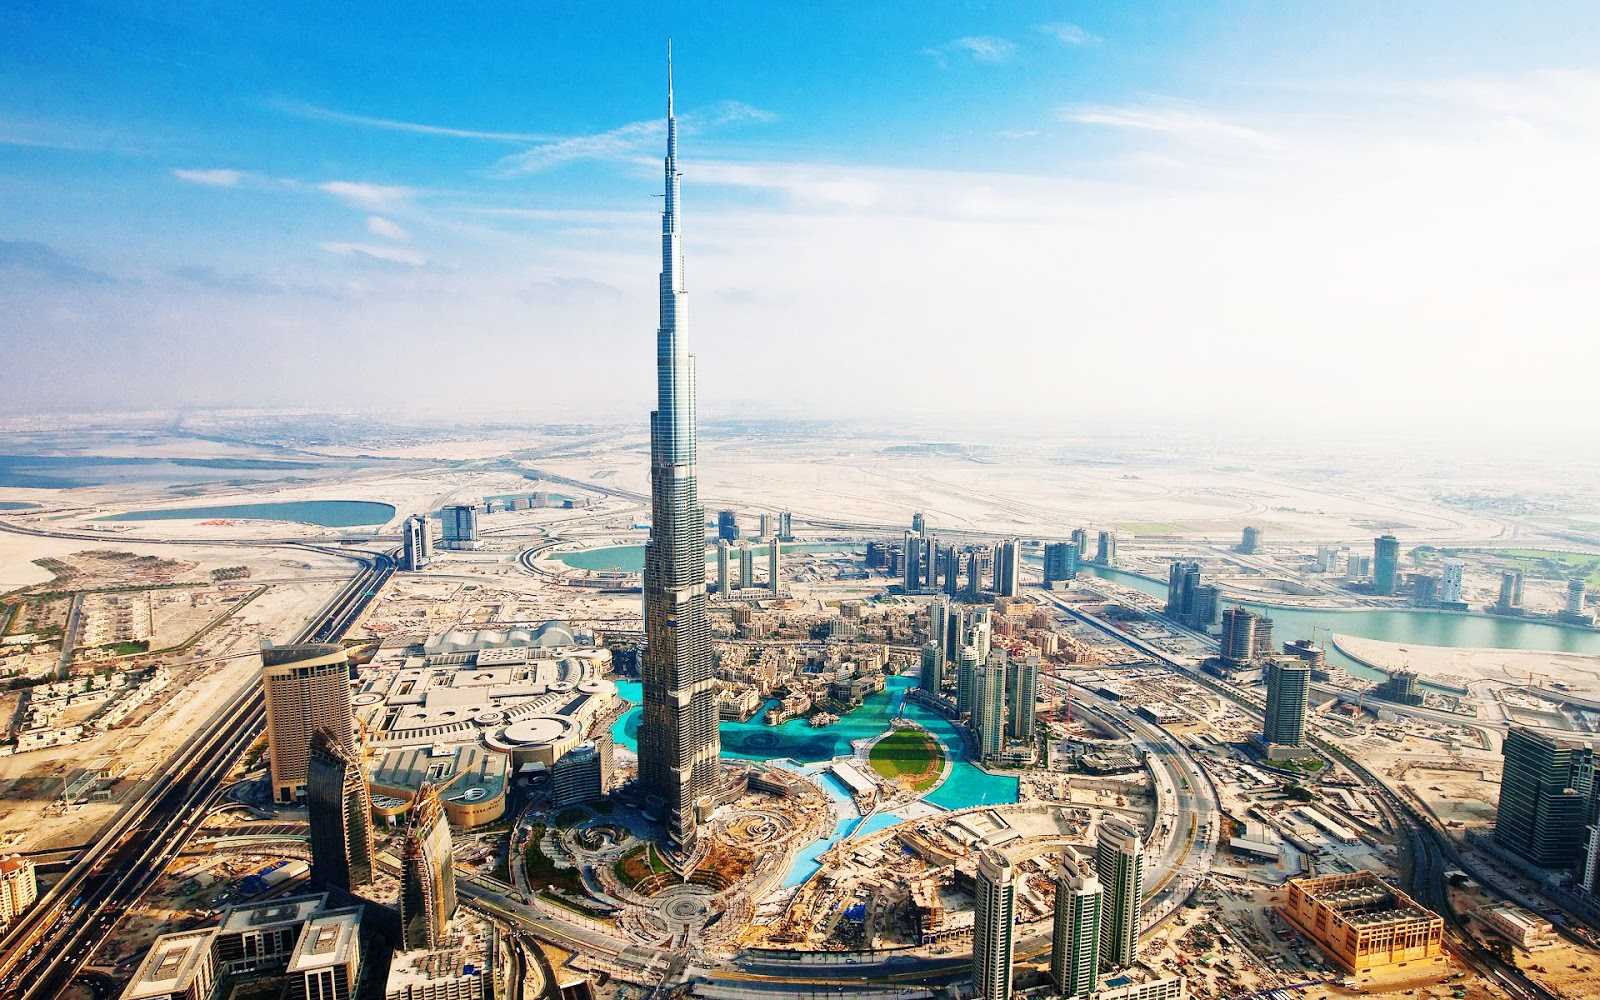 The fabulous 6 night United Arab Emirates Honeymoon itinerary